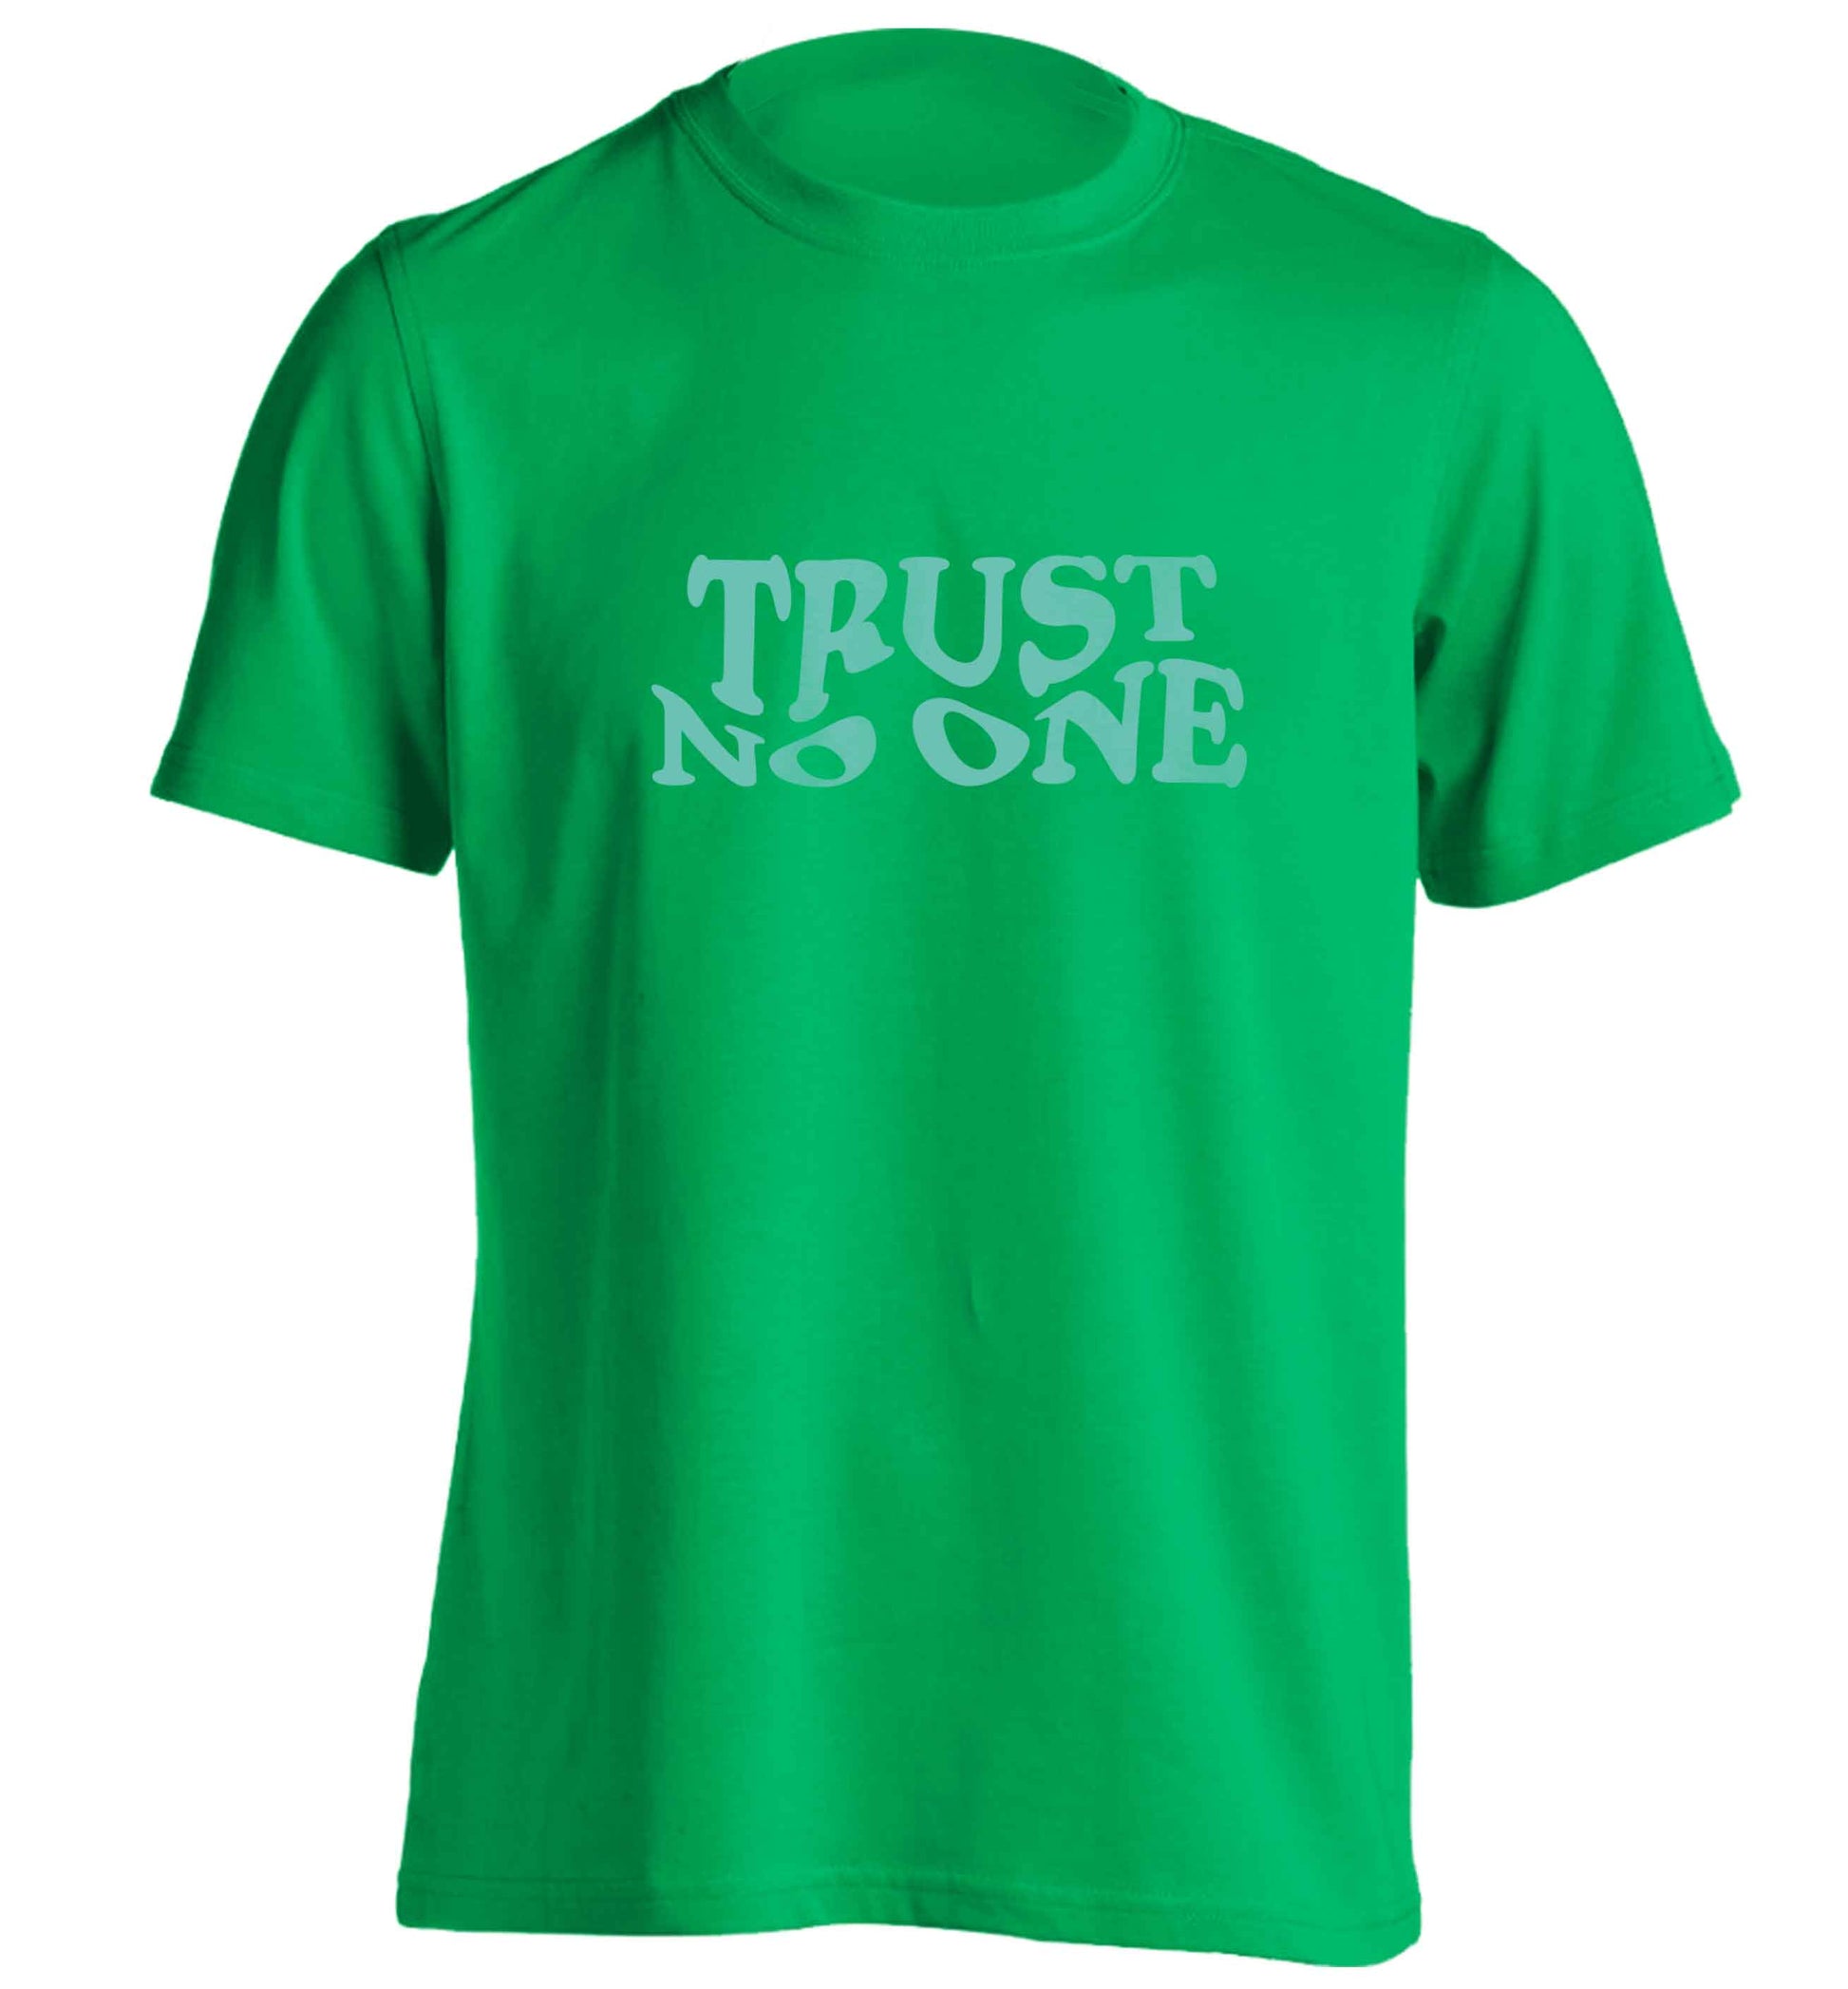 Trust no one adults unisex green Tshirt 2XL